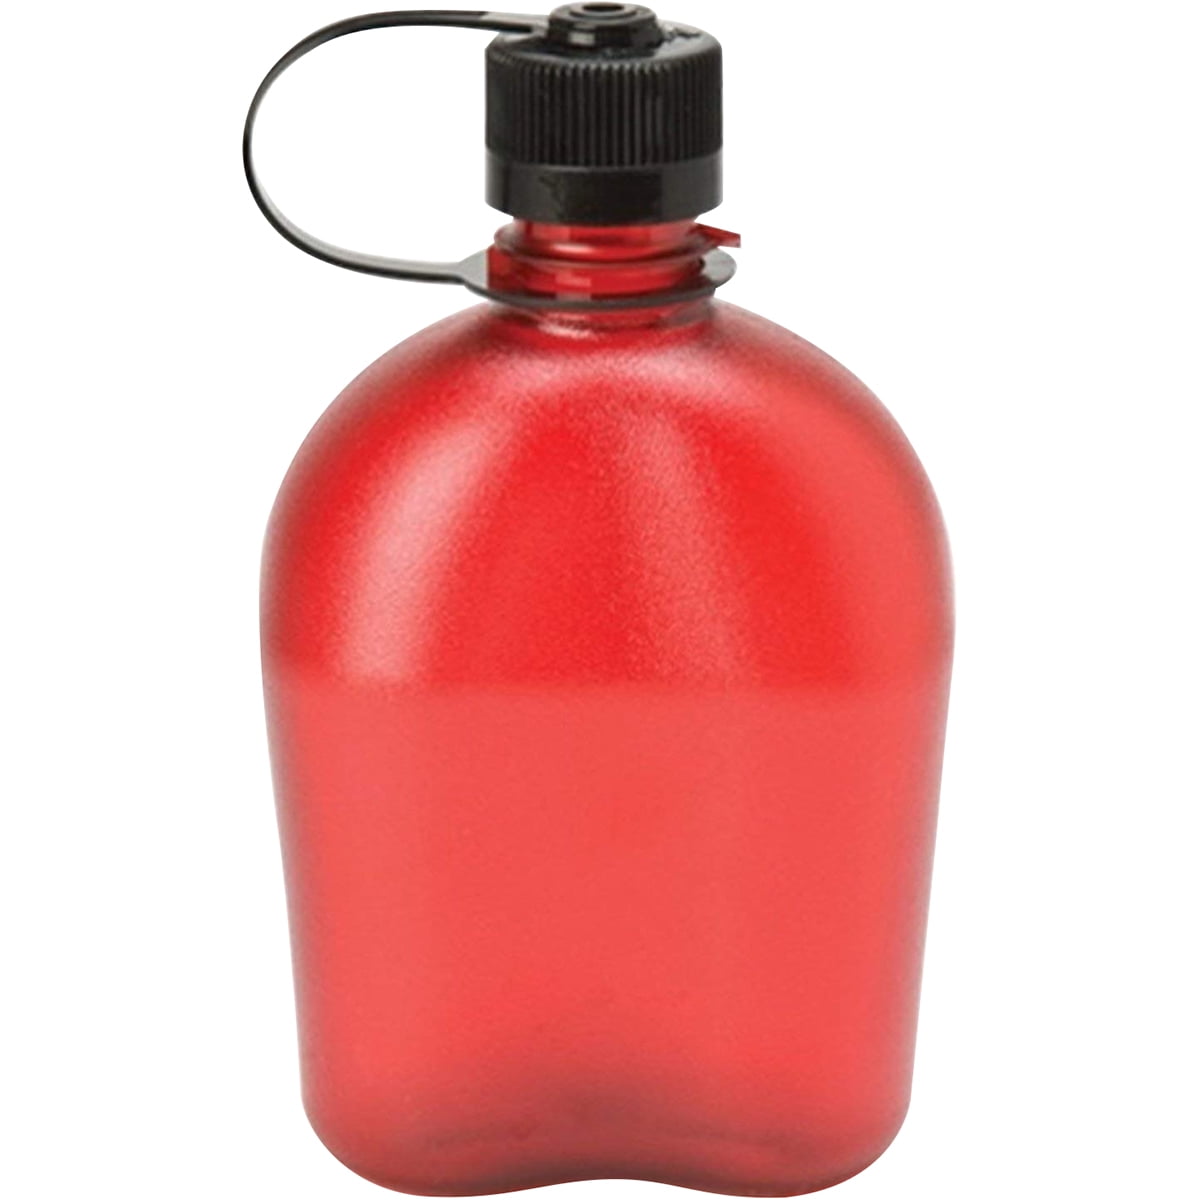 SLM Water Bottle by RedZone